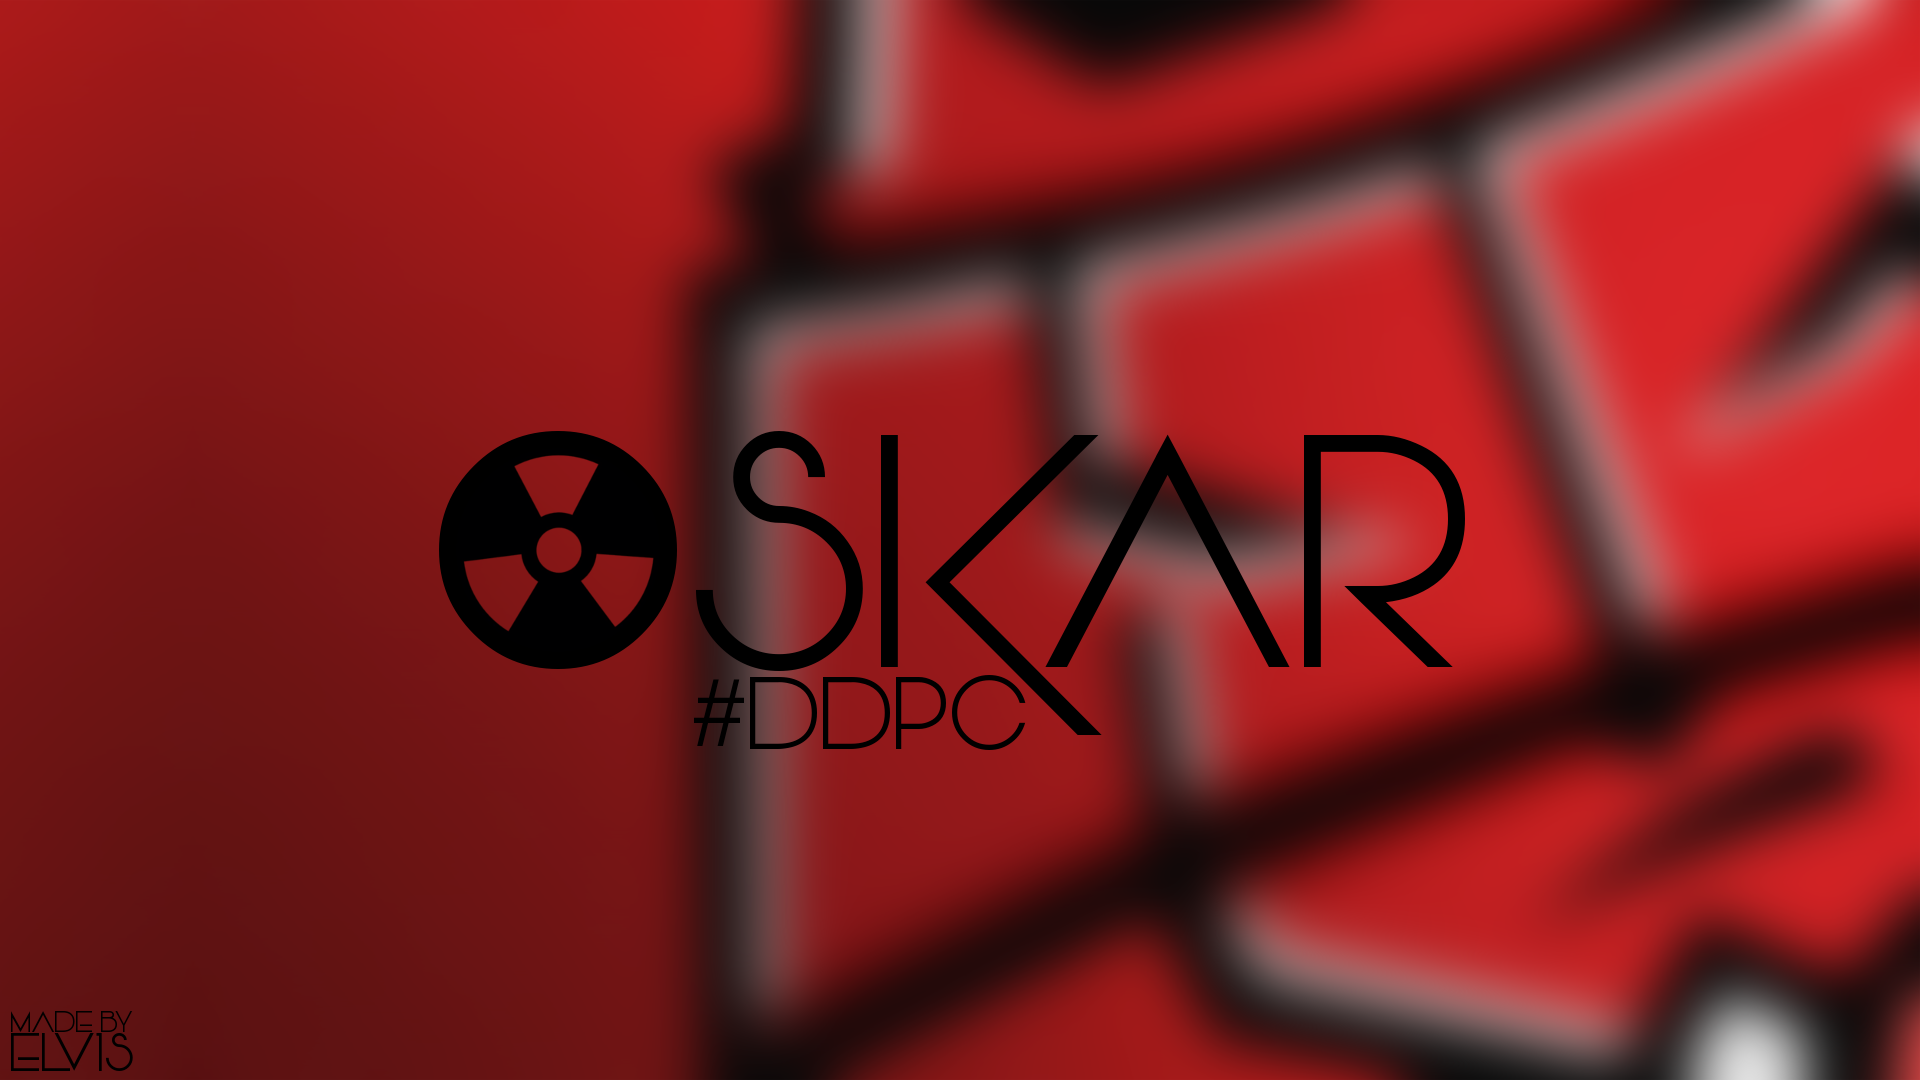 toxicOskar #DDPC wallpaper